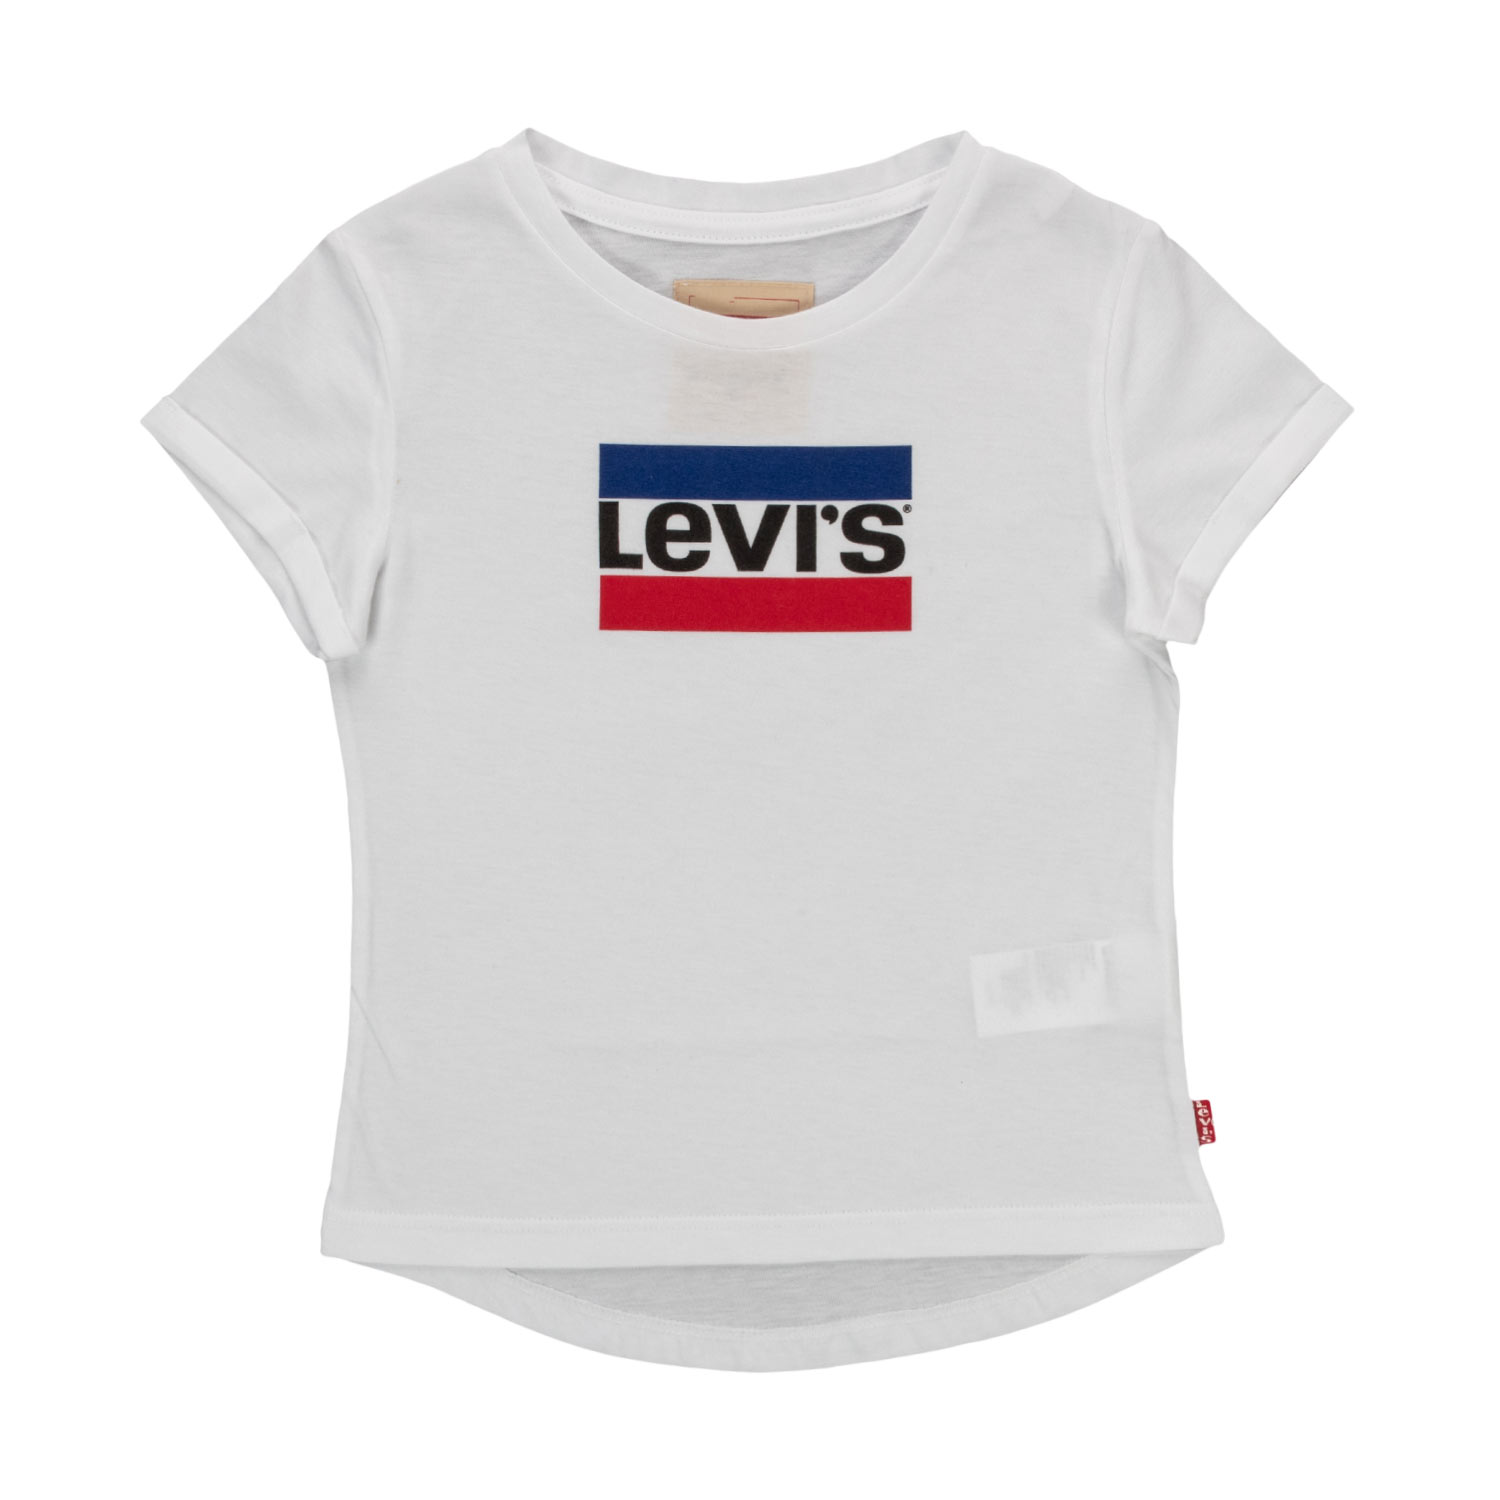 Levi's kids Lvb Short Sleeve Graphic tee Shirt Camiseta para Niños 